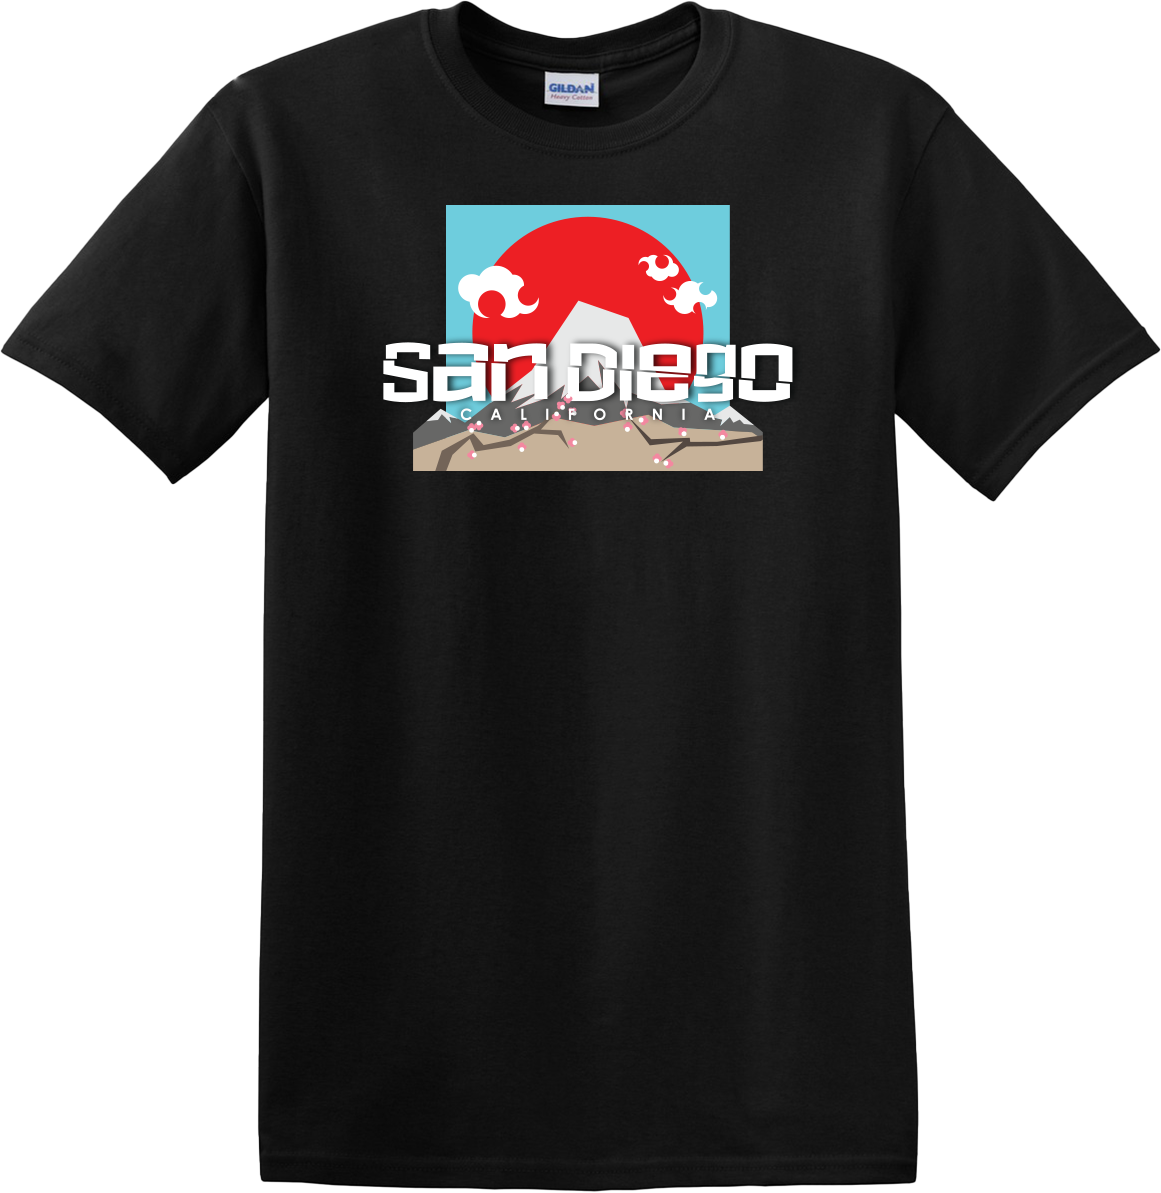 Graphic T-Shirt - SAN DIEGO